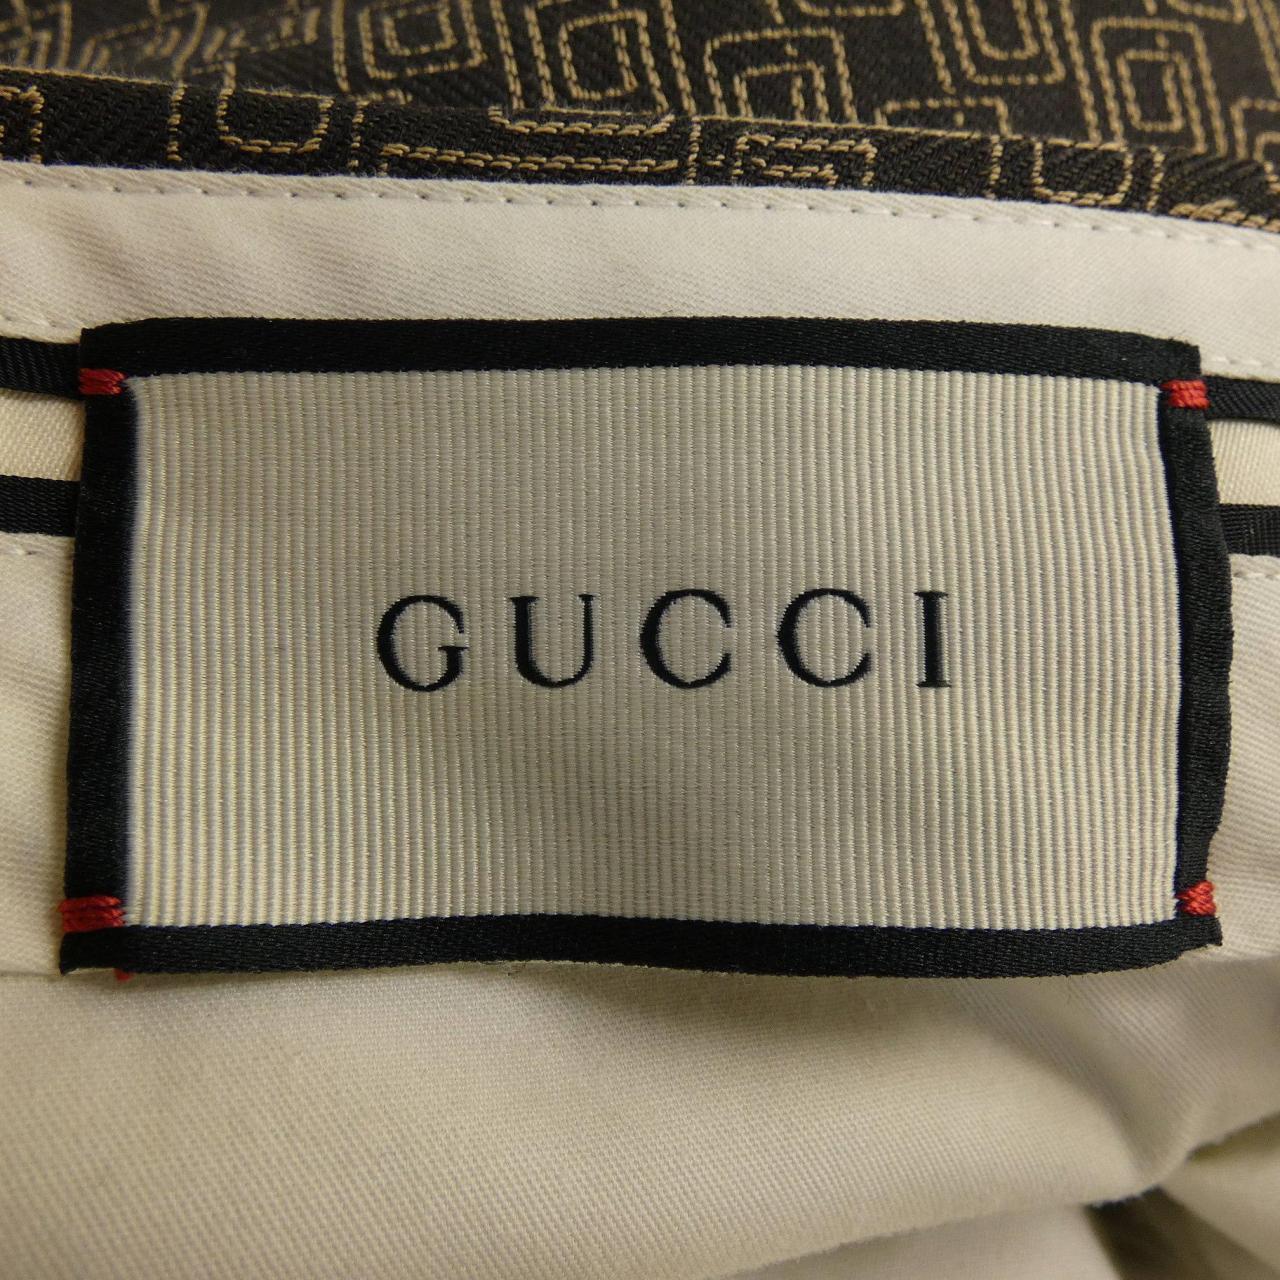 Gucci GUCCI pants